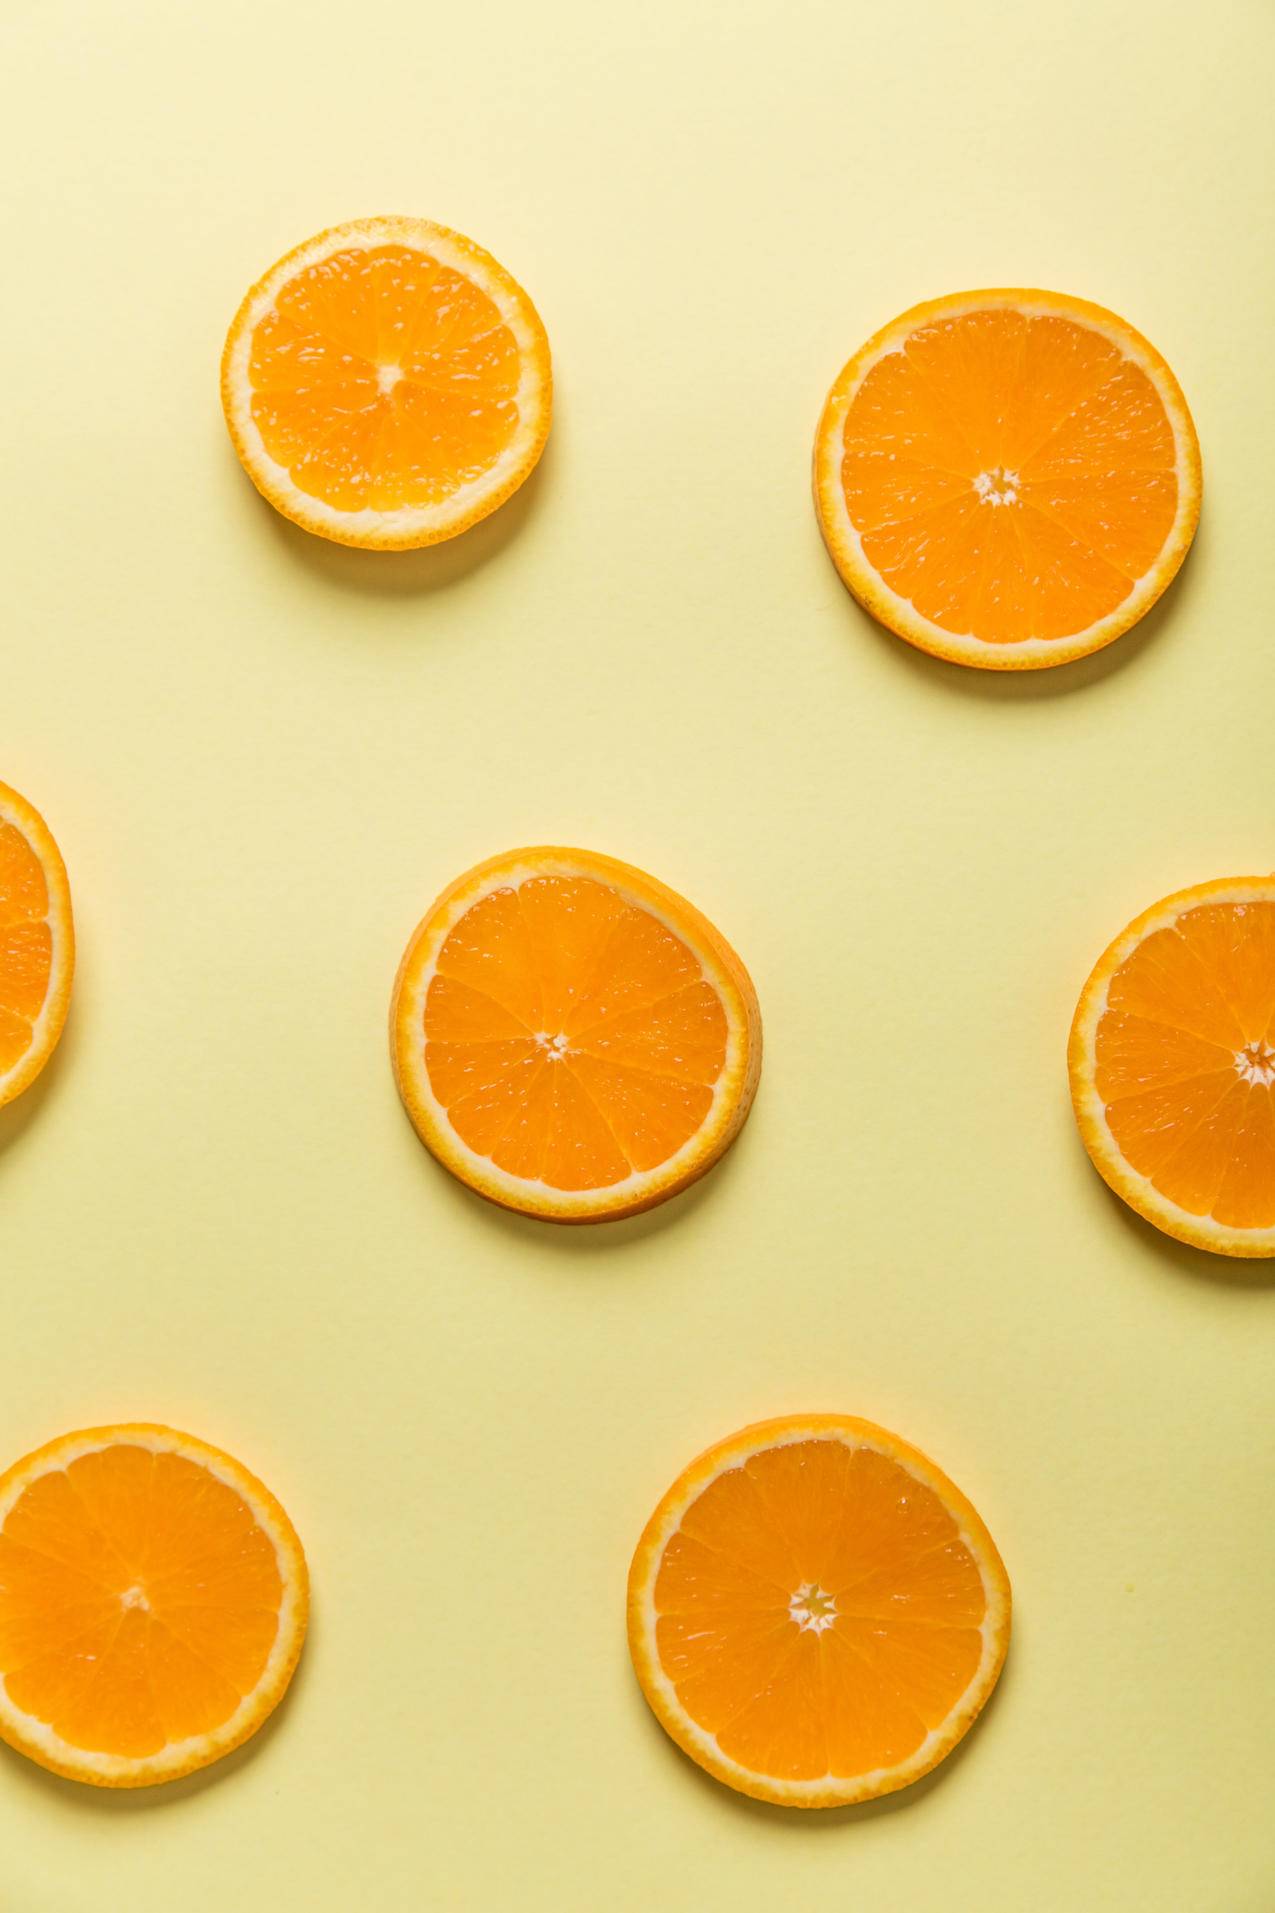 cc0可商用高清的橙子,水果,切片,多汁的图片